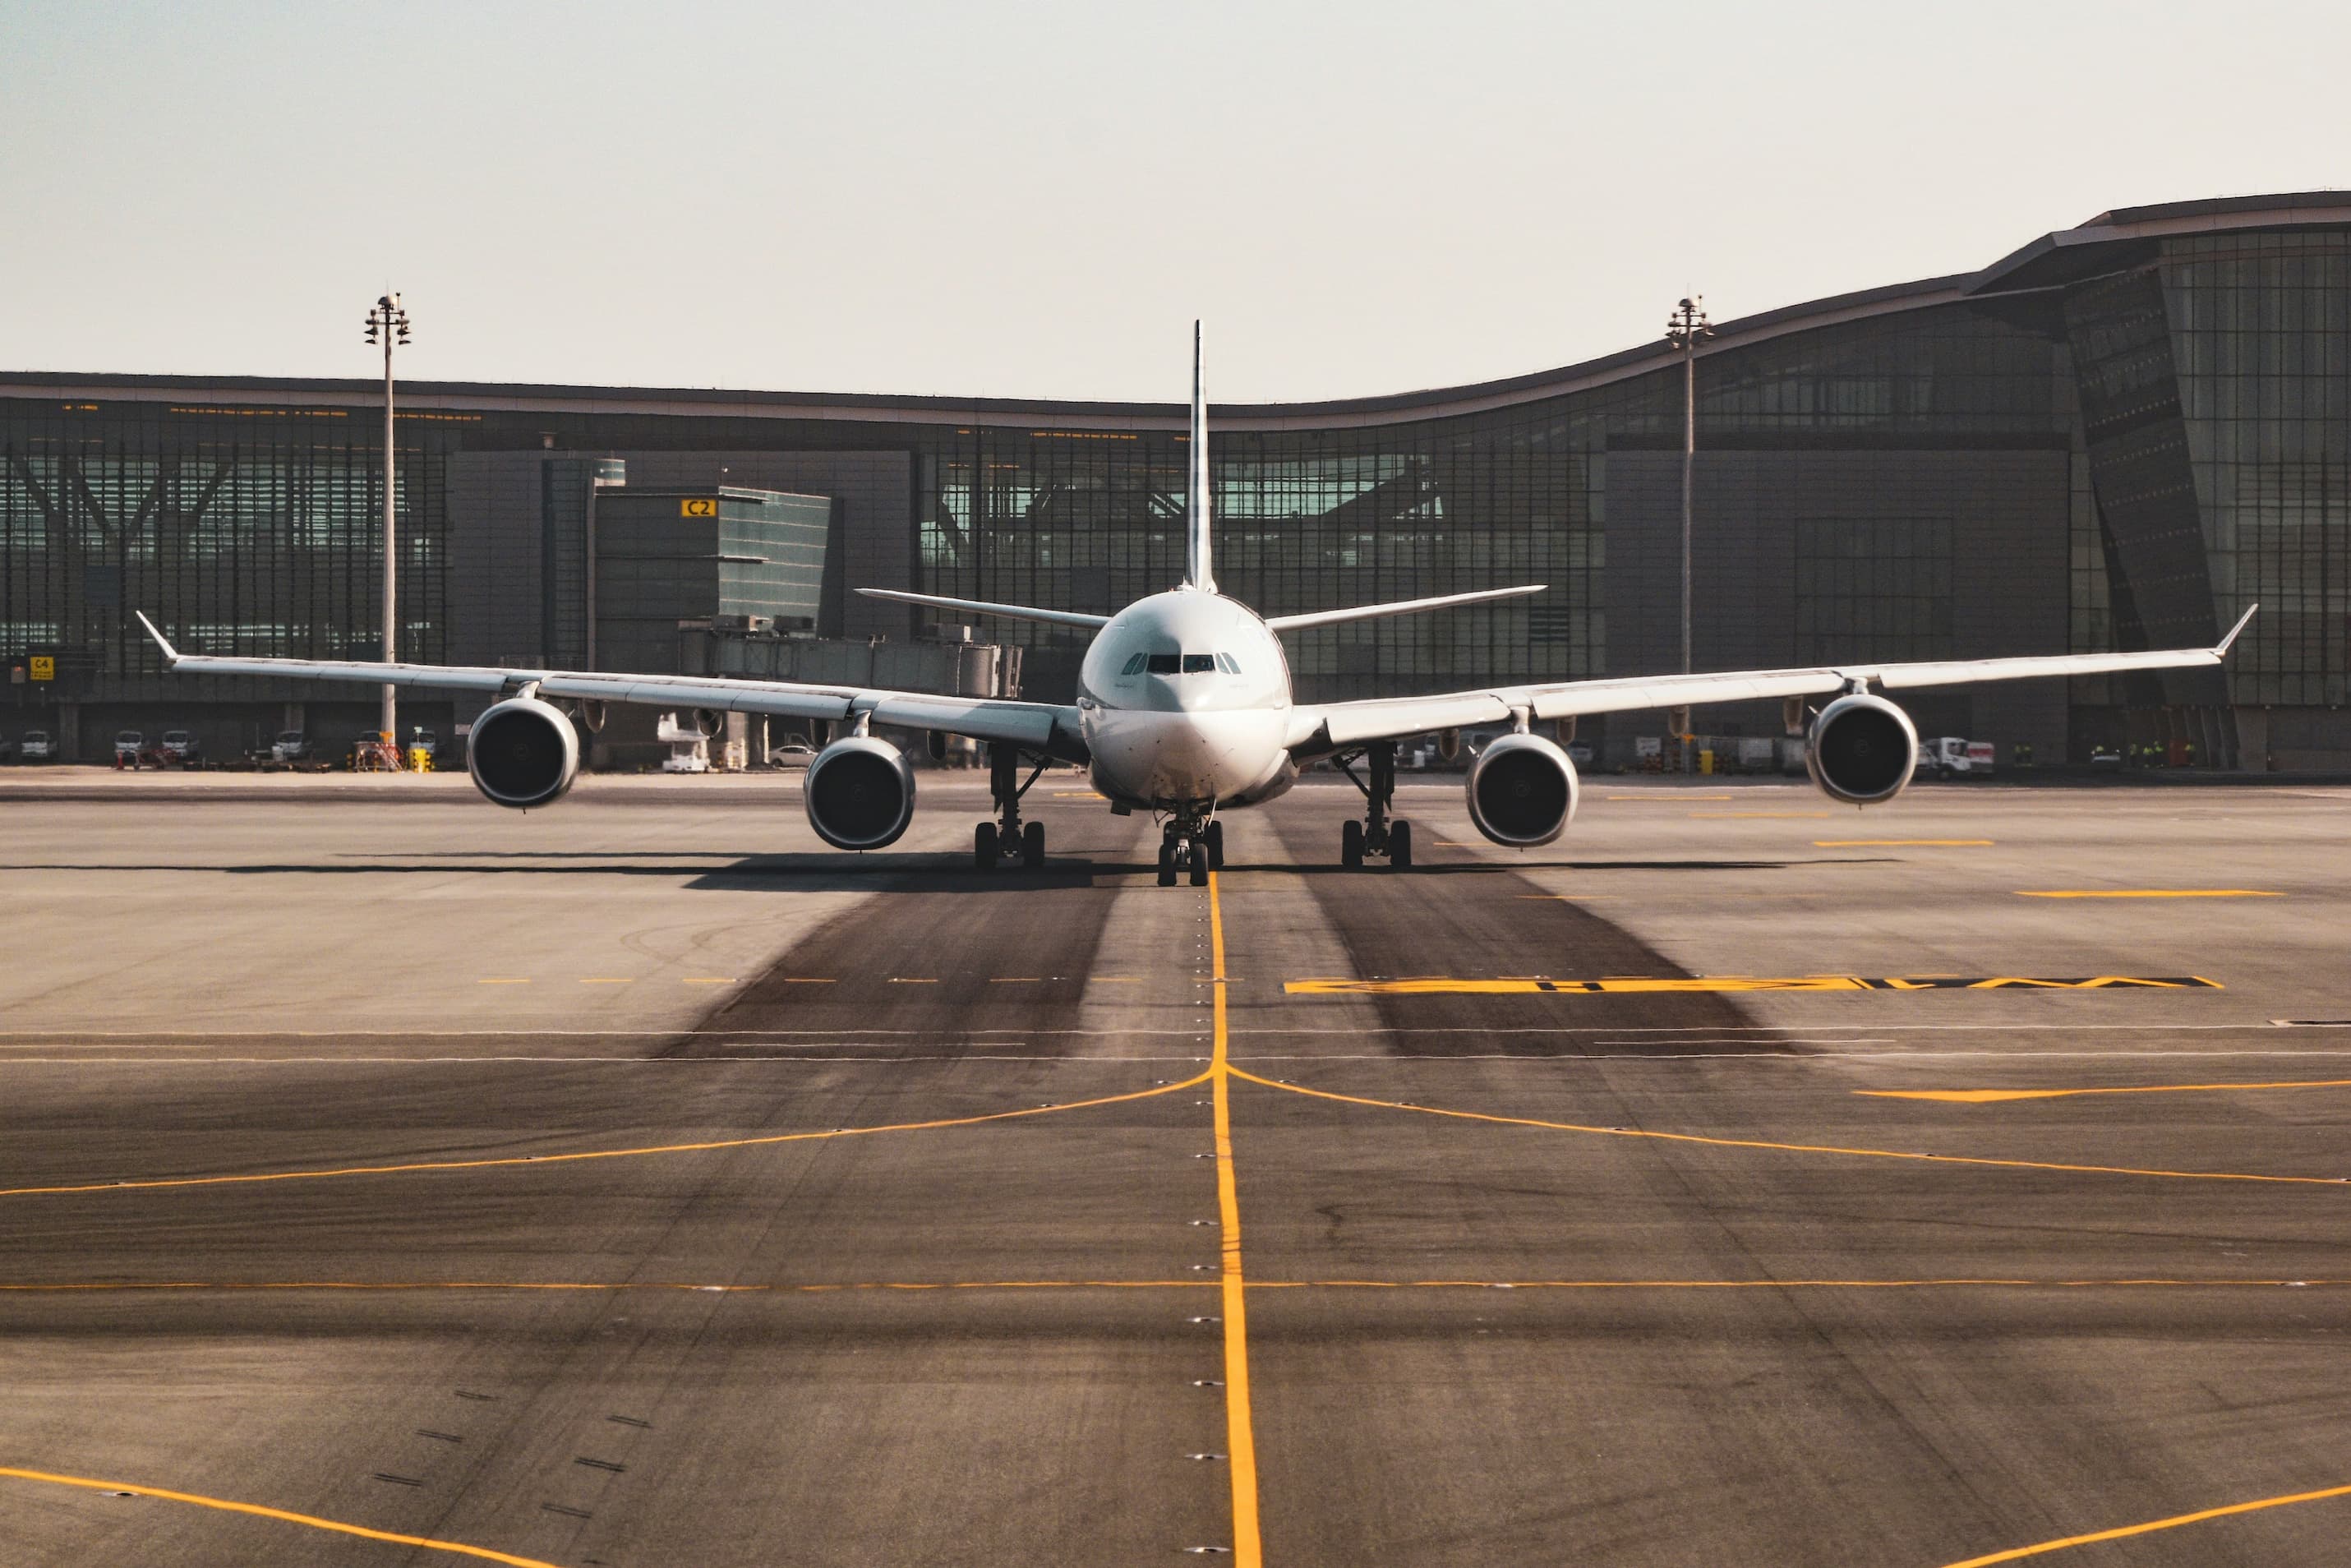 A plane preparing to leave an airport terminal